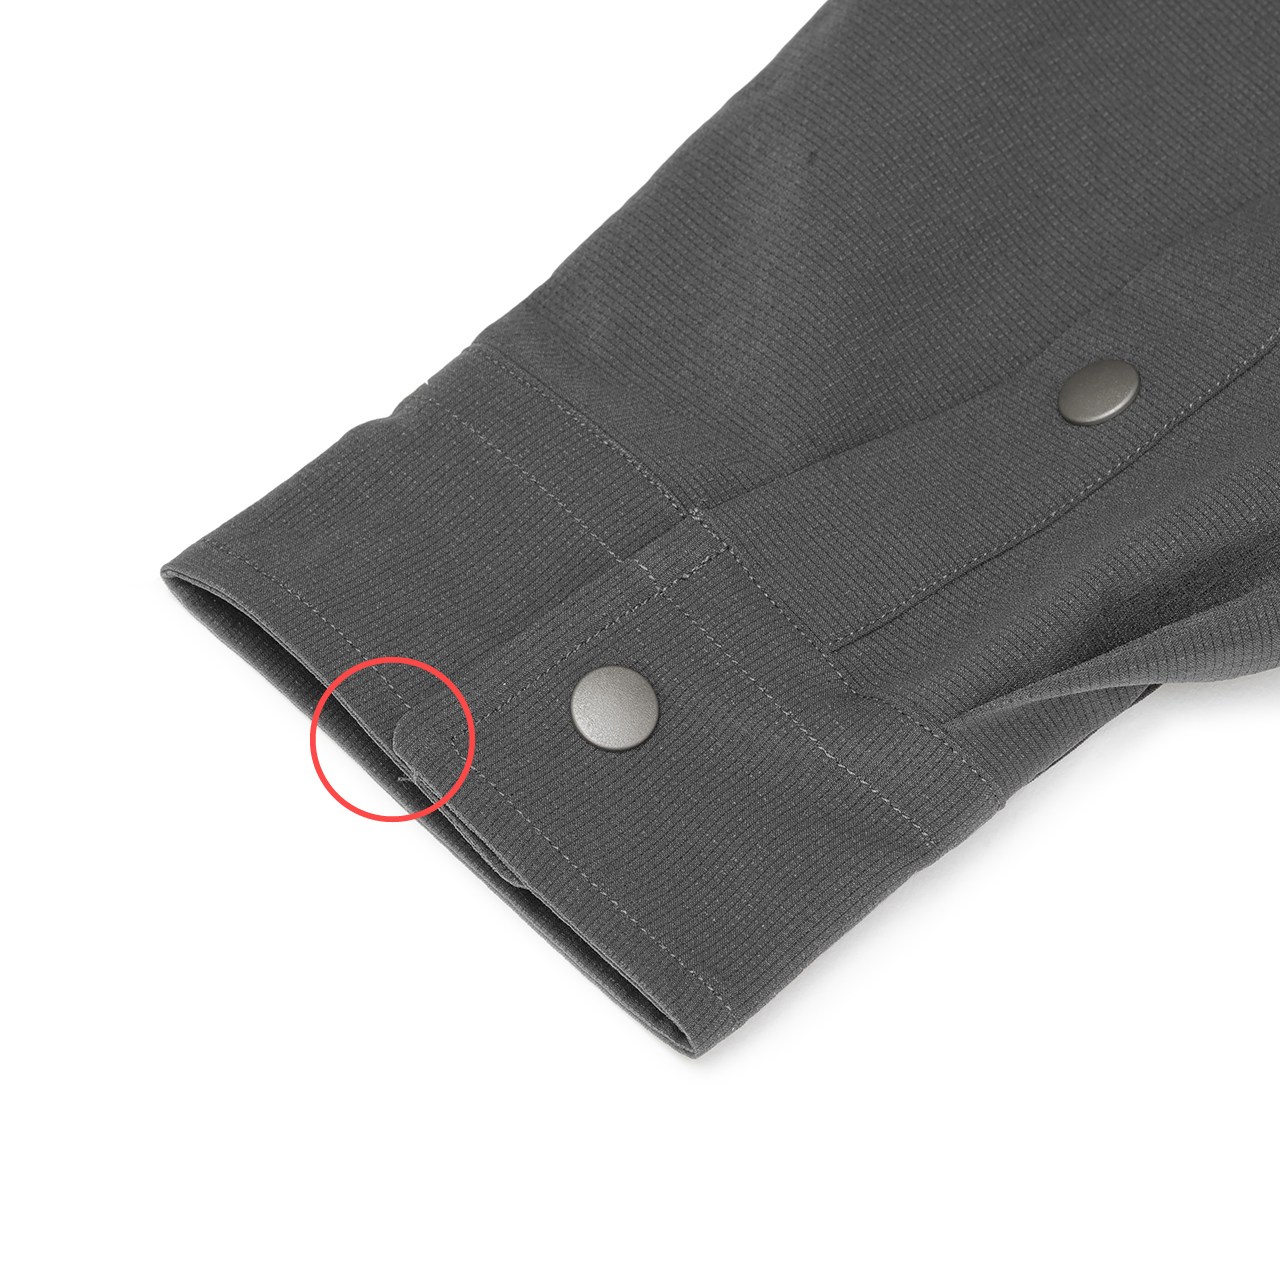 Basic Long Sleeve Shirt | RIDGE MOUNTAIN GEAR